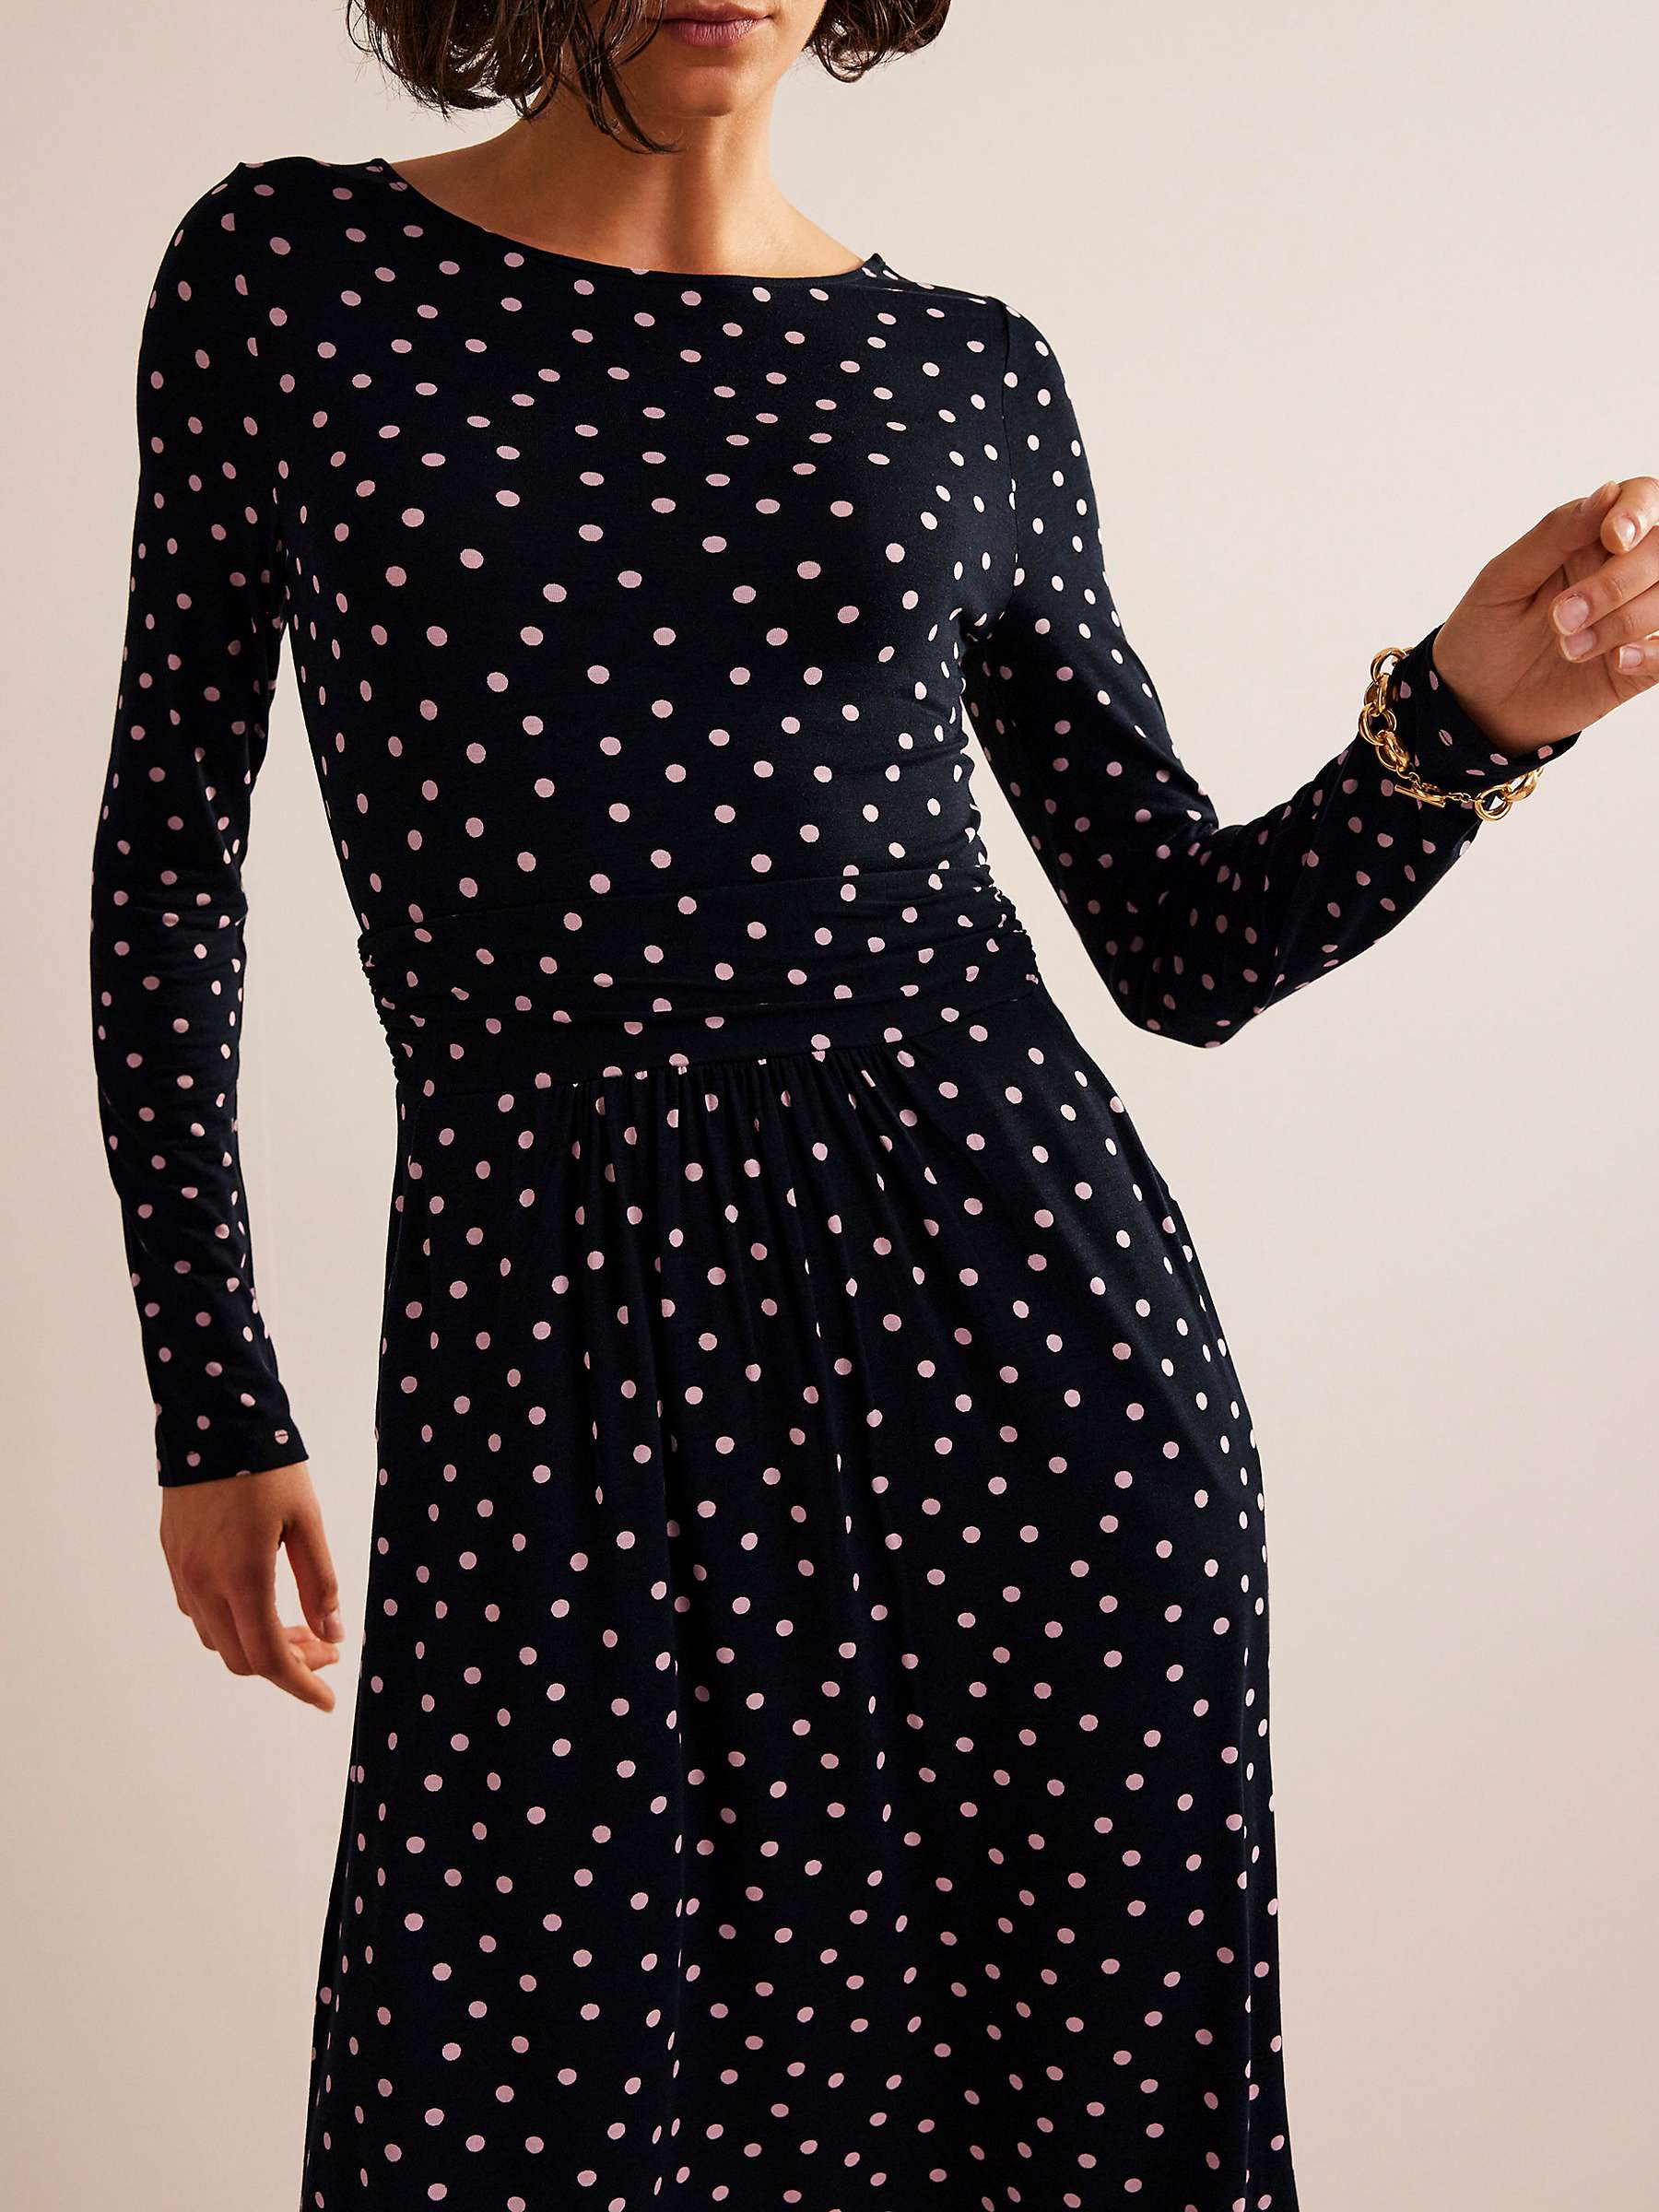 Buy Boden Abigail Spot Ecovero Jersey Dress, Black/Milkshake Spot Online at johnlewis.com